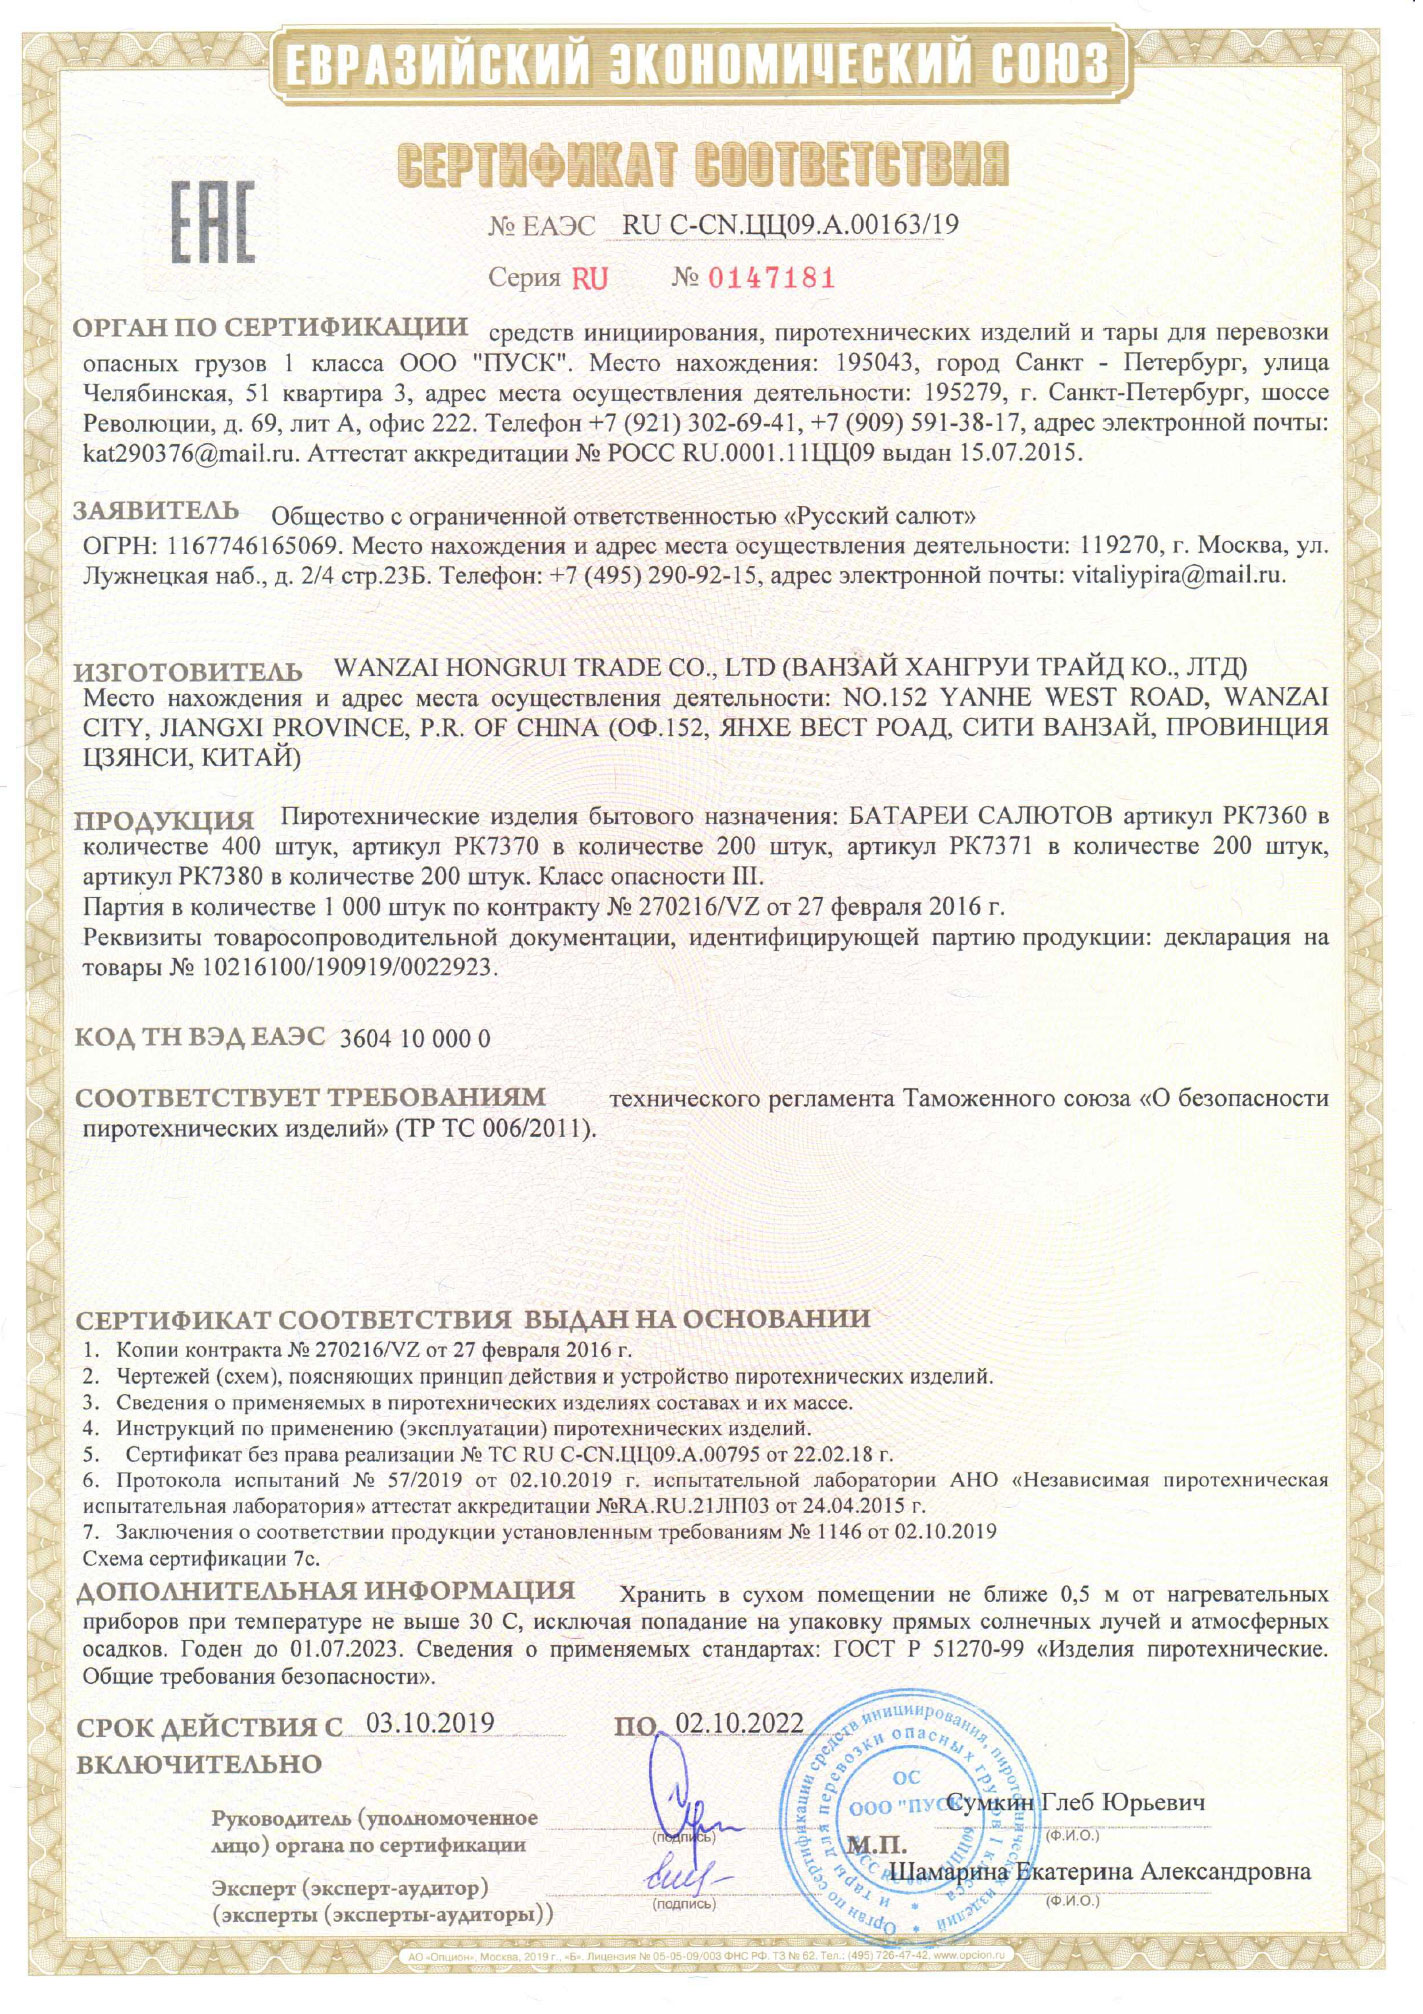 Сертификат Разгуляй 1,0" x 72 (арт. РК7370)